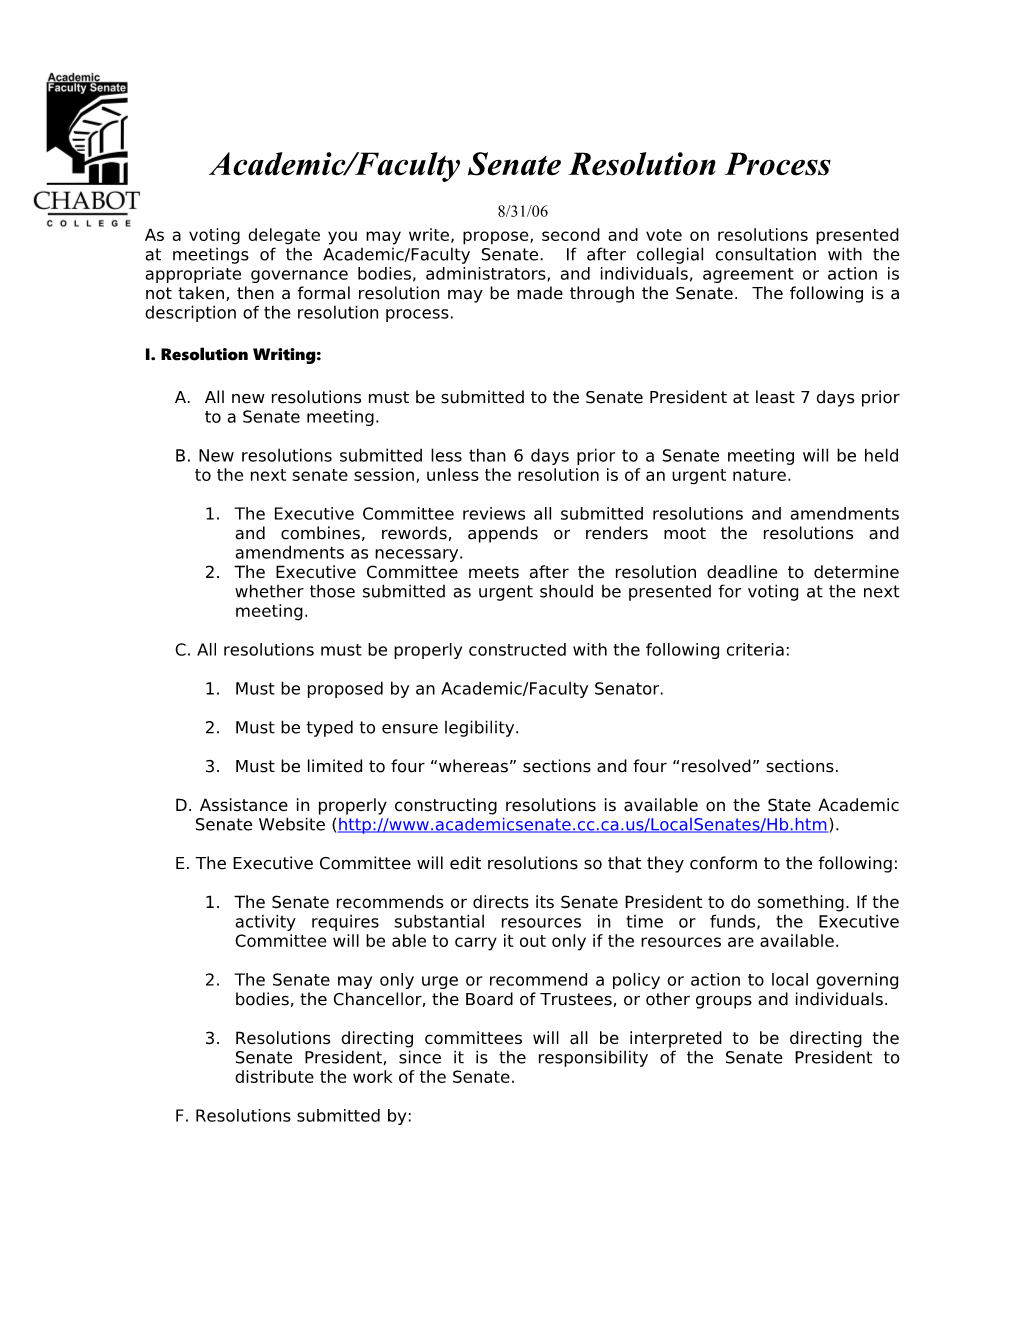 Academic Senate Resolution Process